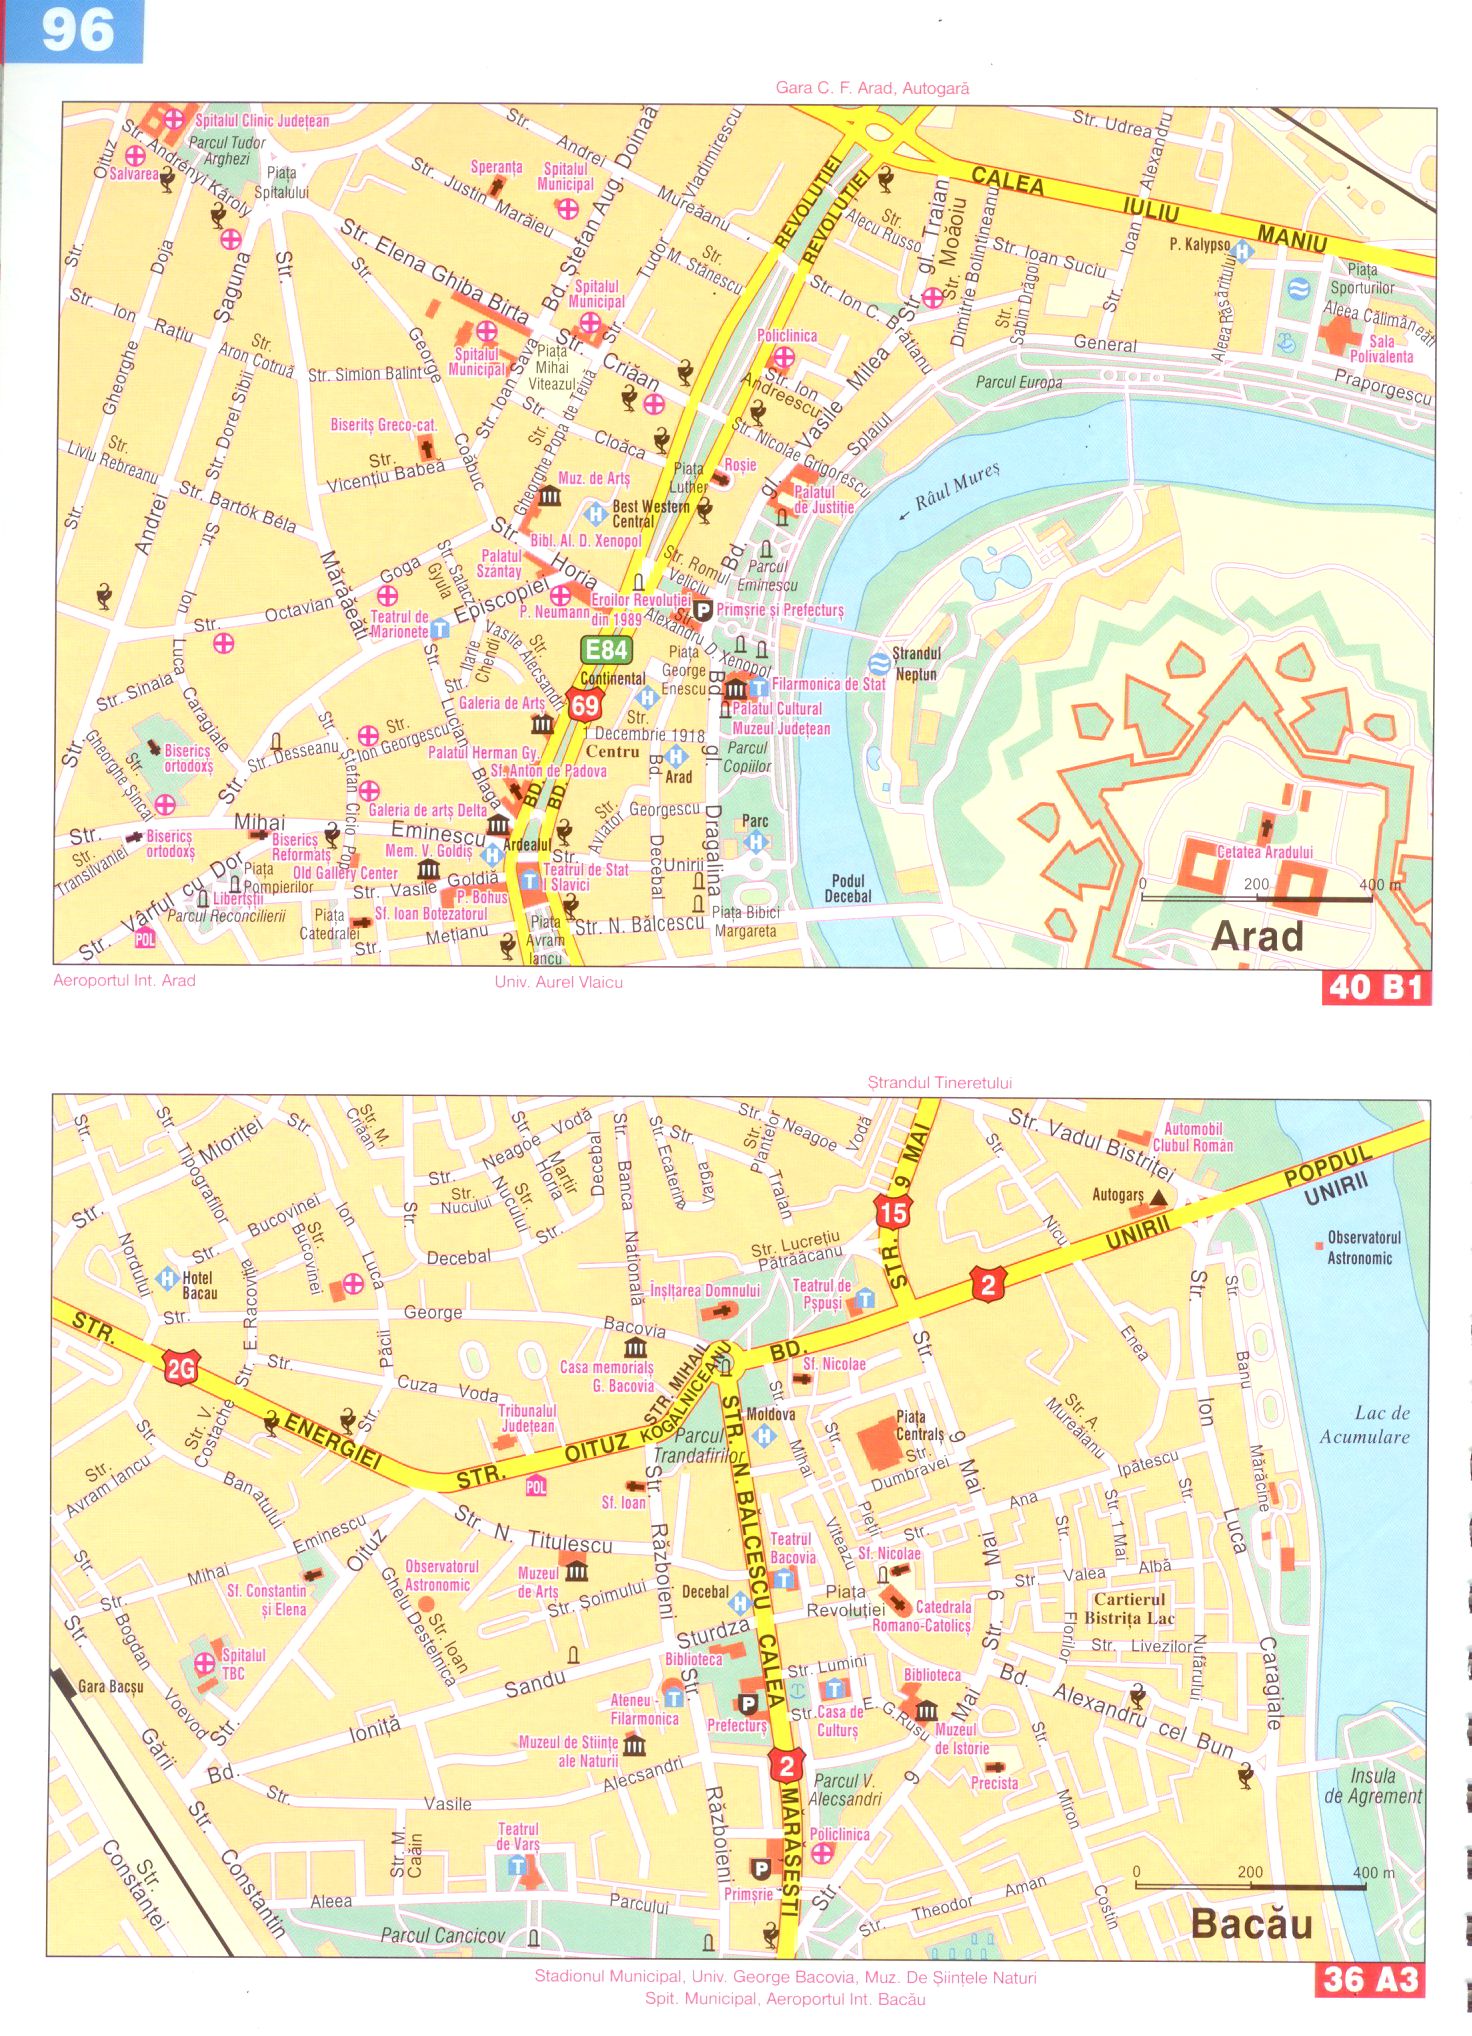 Romania road atlas sample city maps